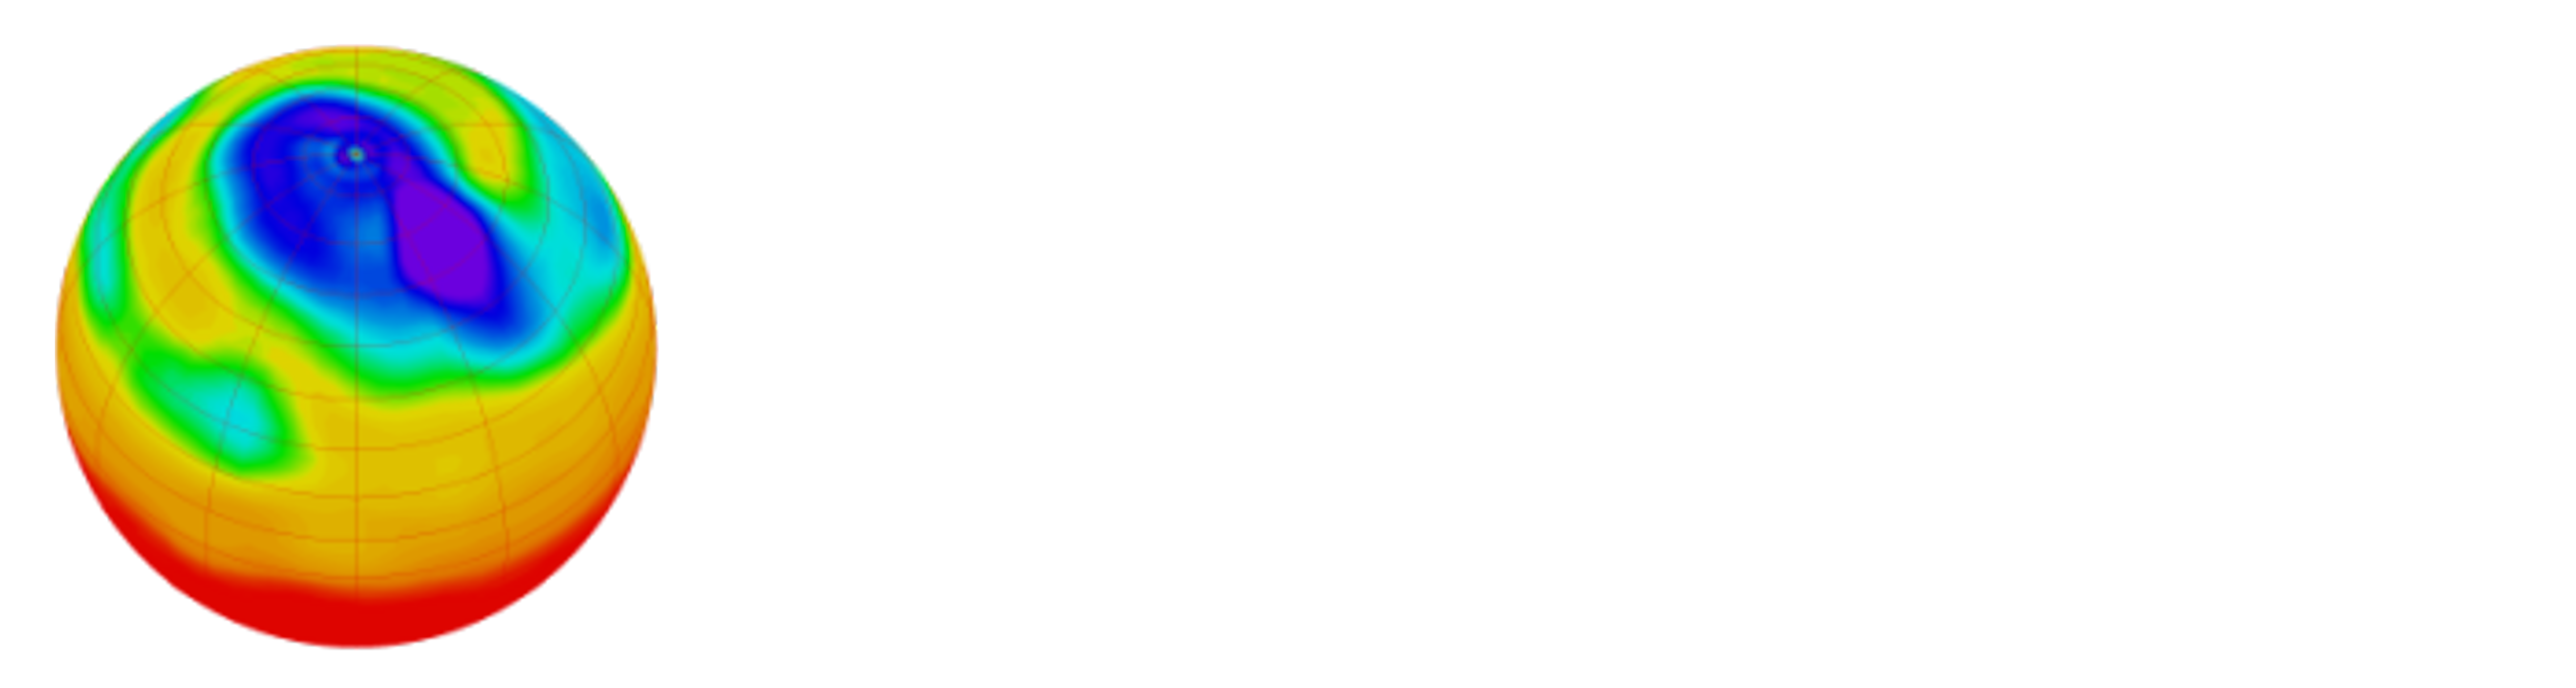 Centre for Environmental Data Analysis logo